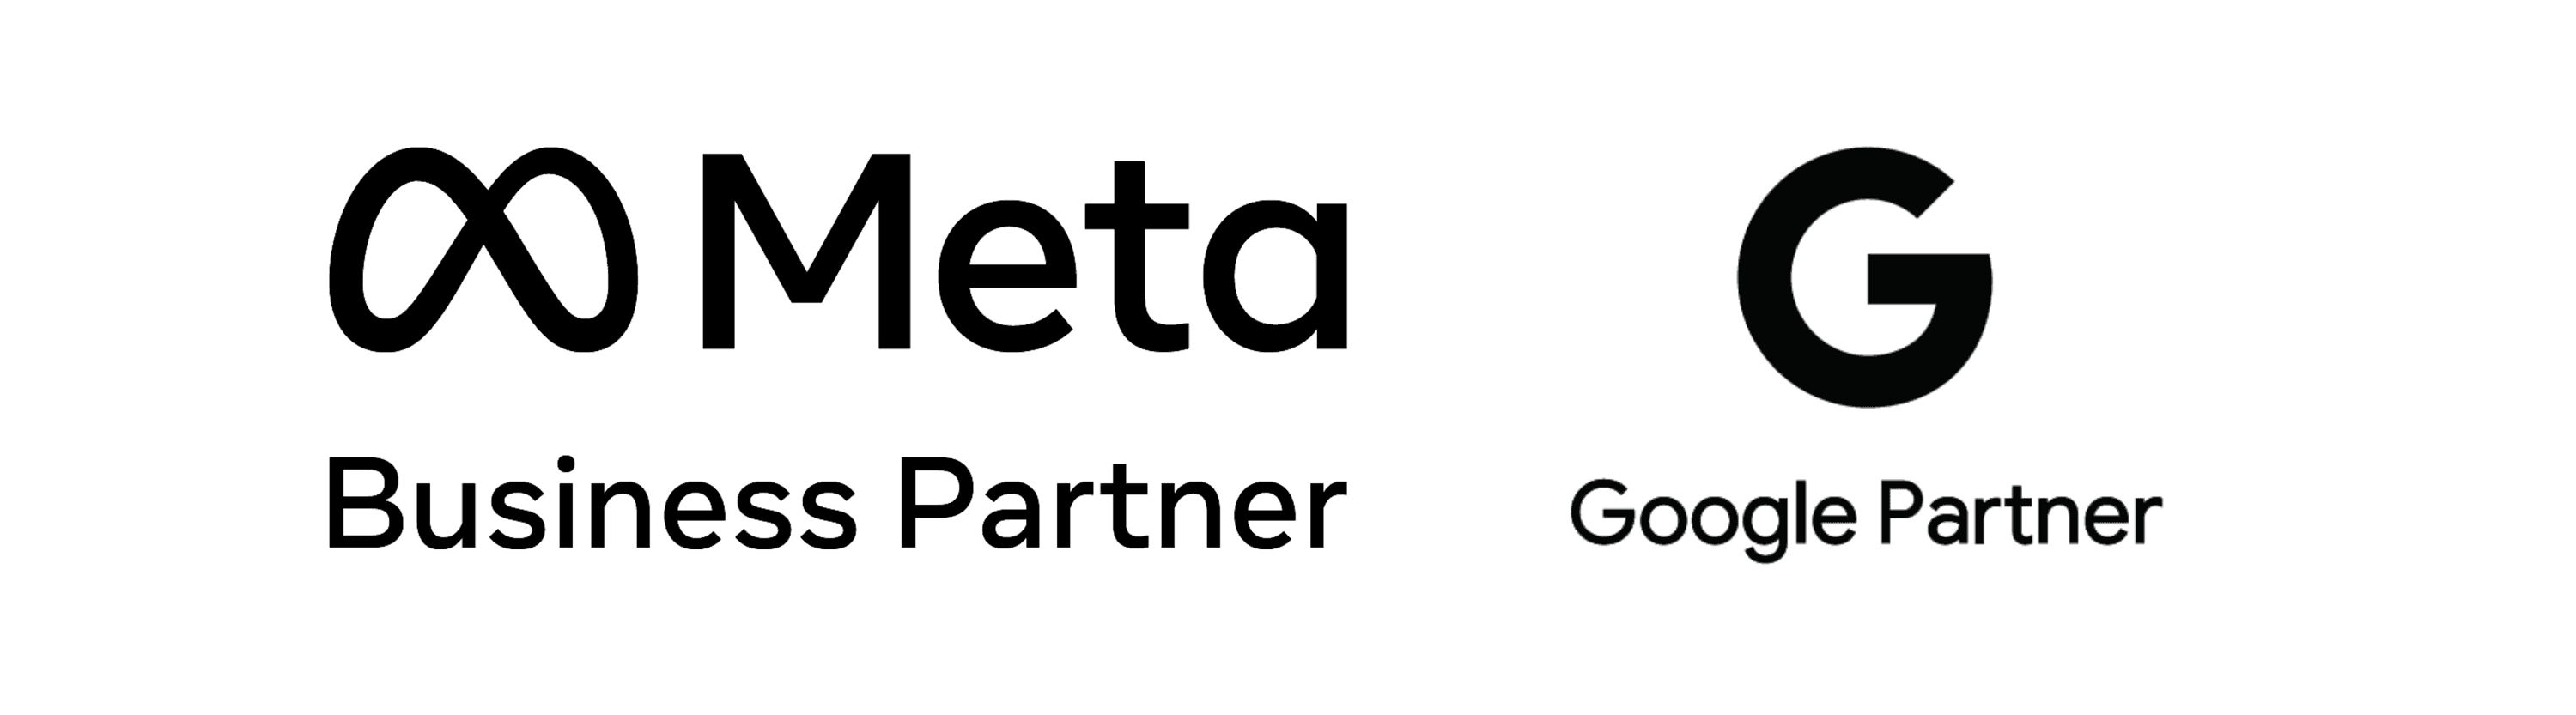 Google and Meta Partners